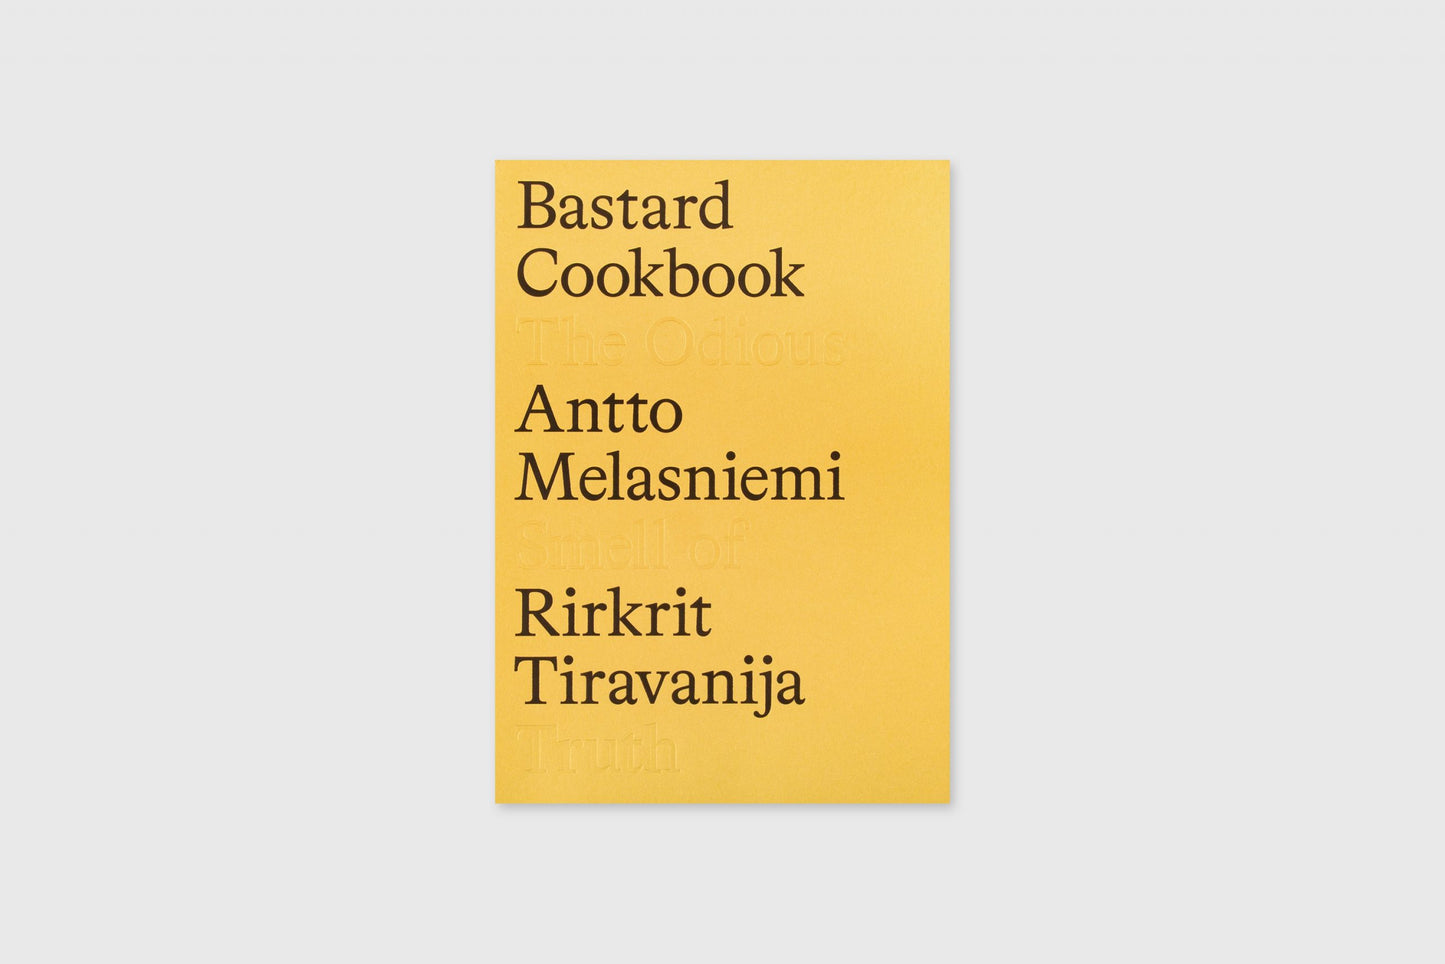 The Bastard Cookbook